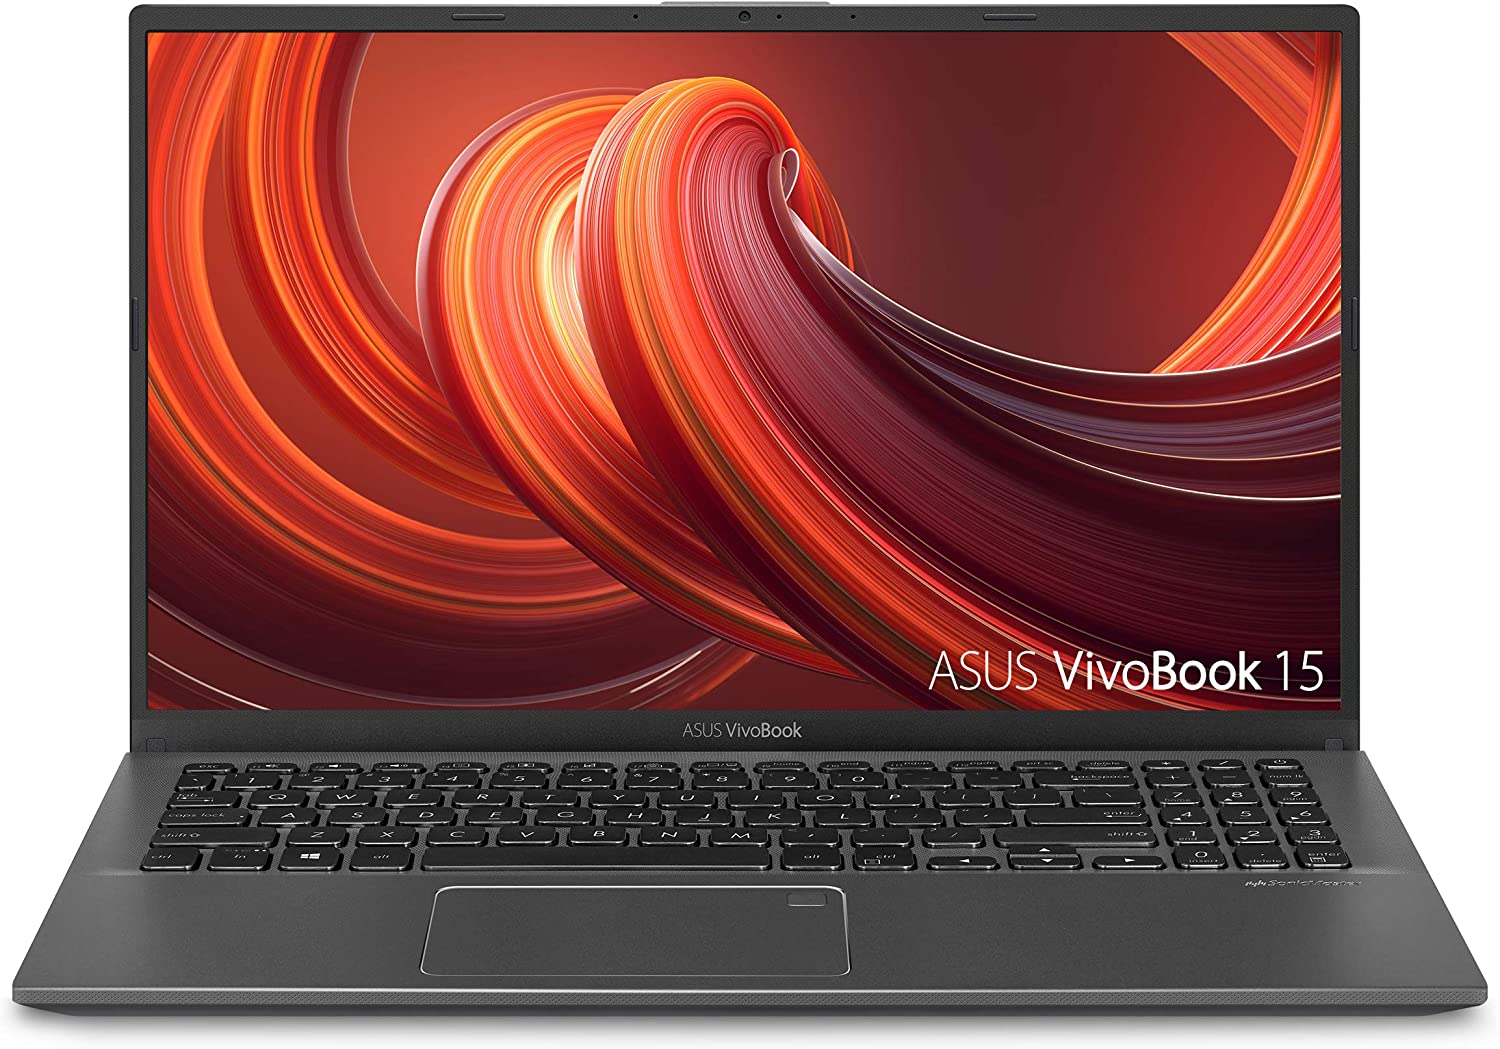 ASUS VIVOBOOK -  best business laptop under 1000